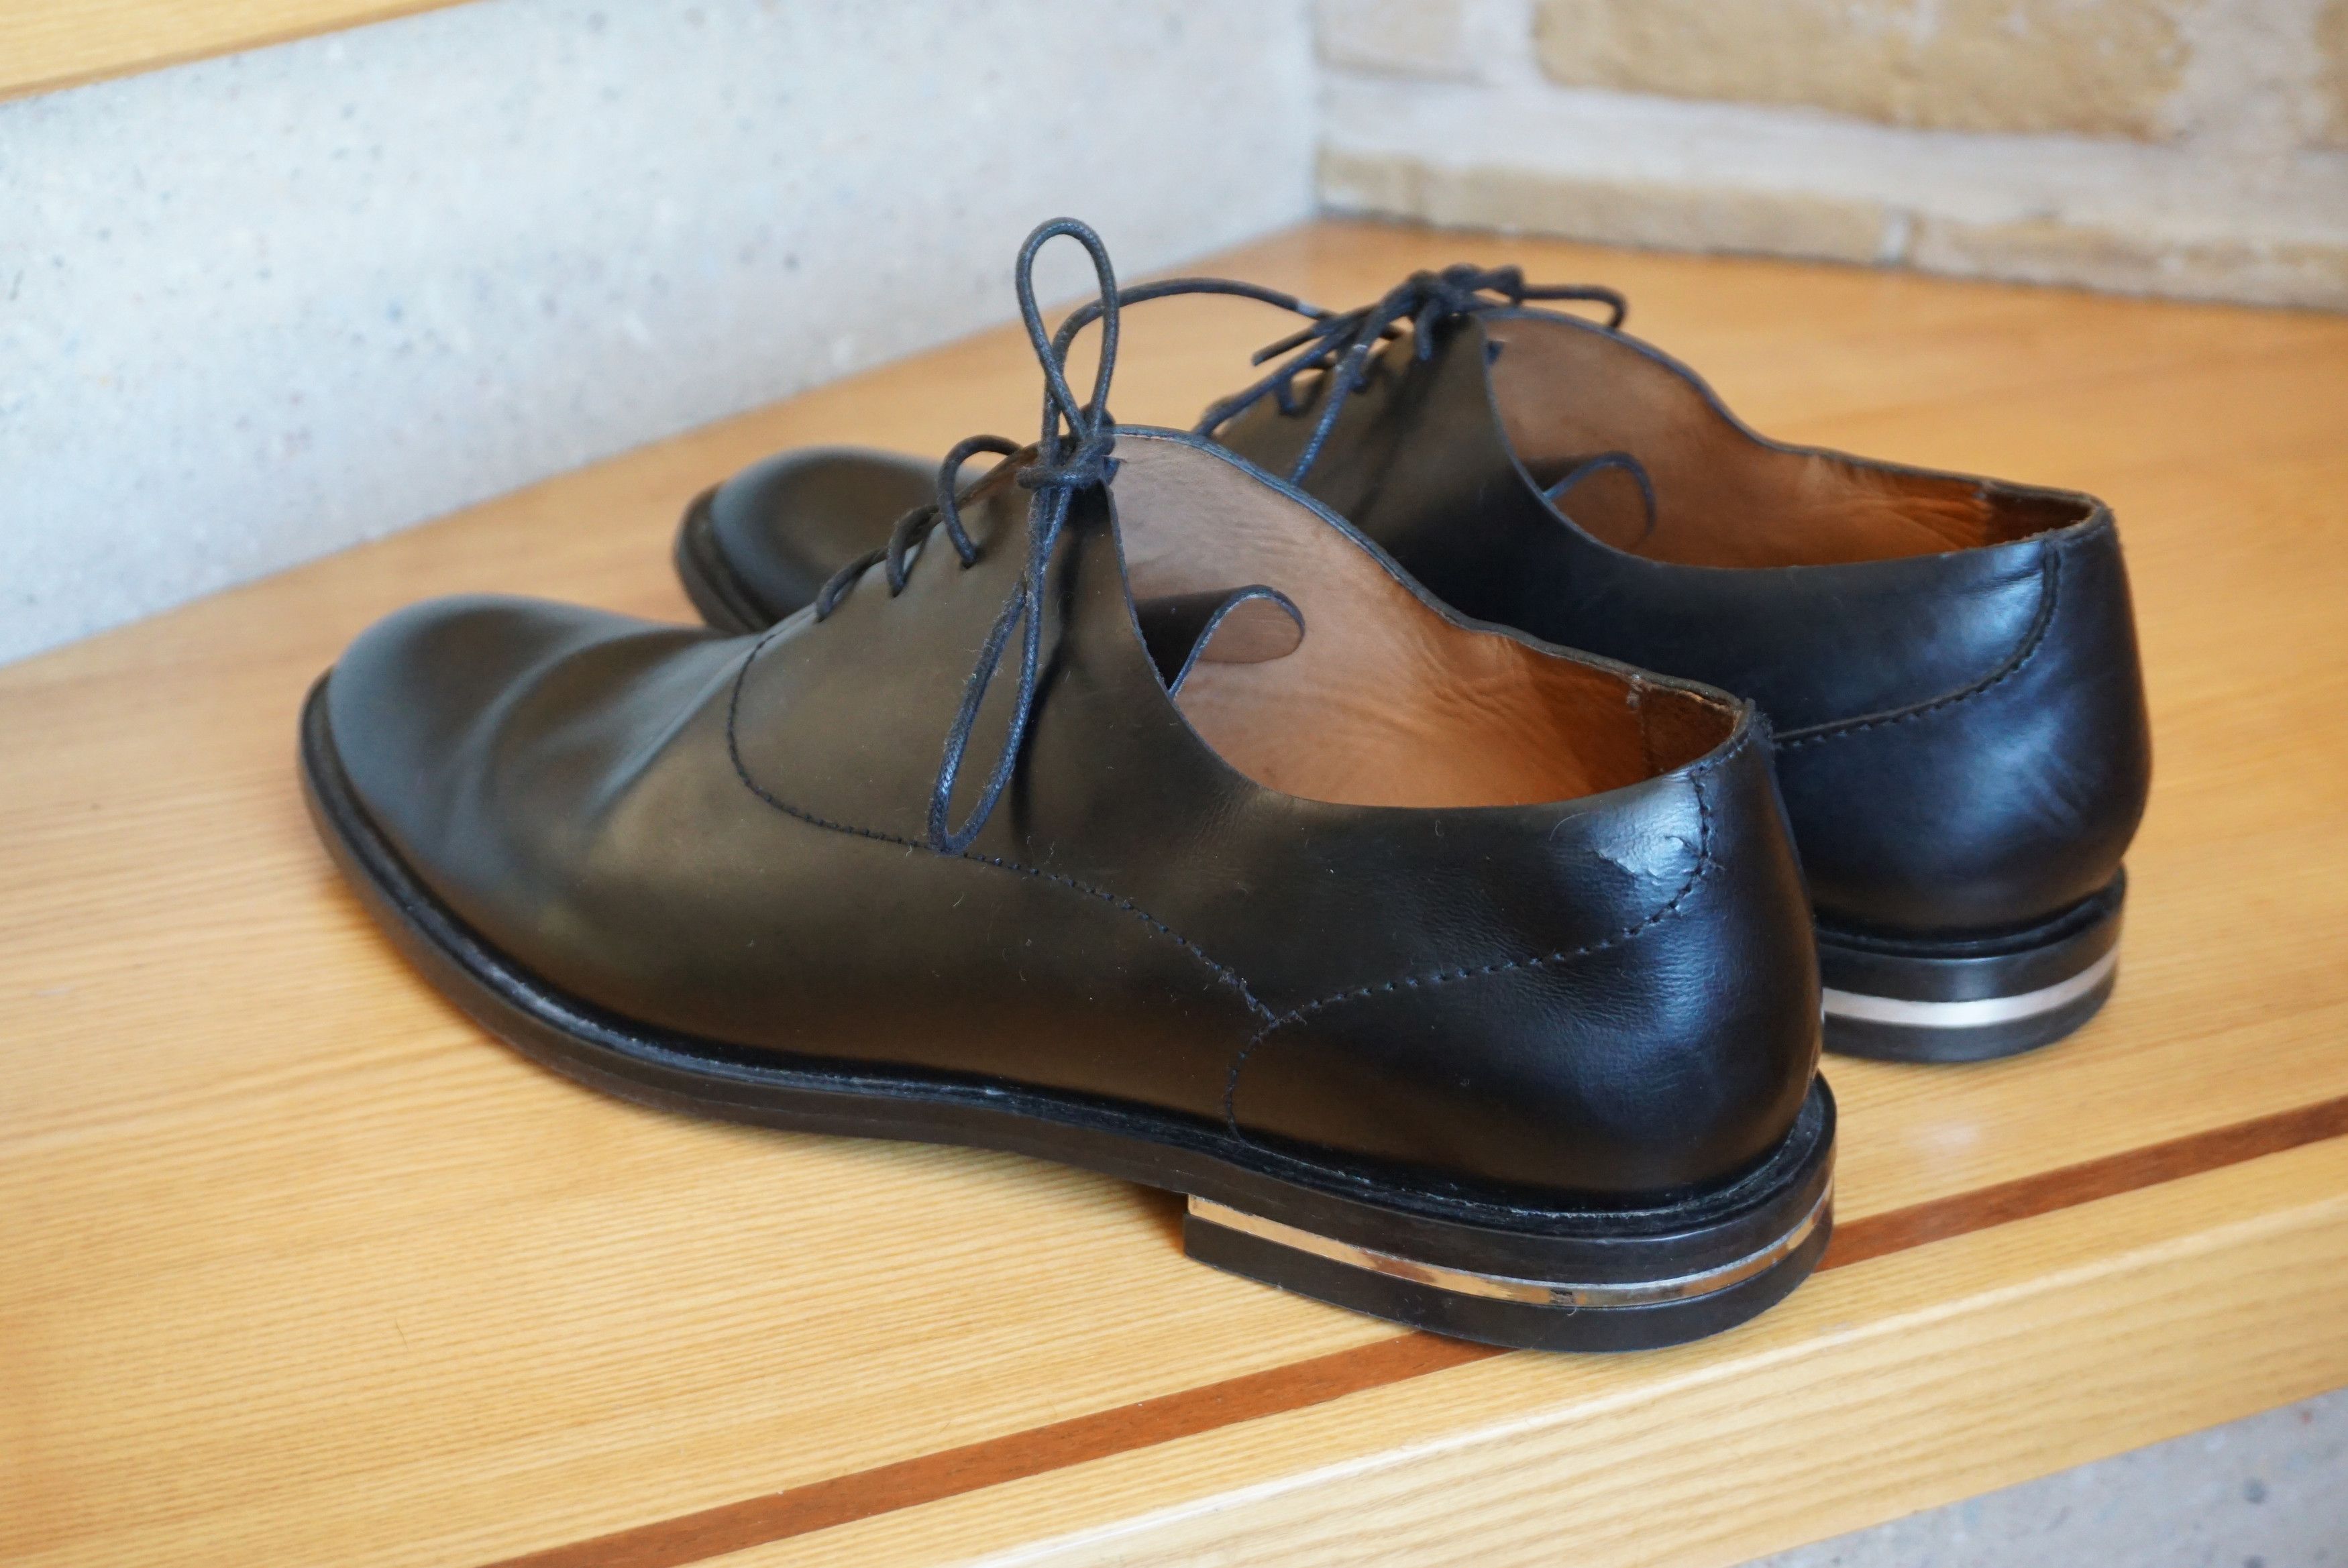 Cos COS RPR$250 leather office shoes EU44 black formal lace up Size US 10.5 / EU 43-44 - 9 Thumbnail